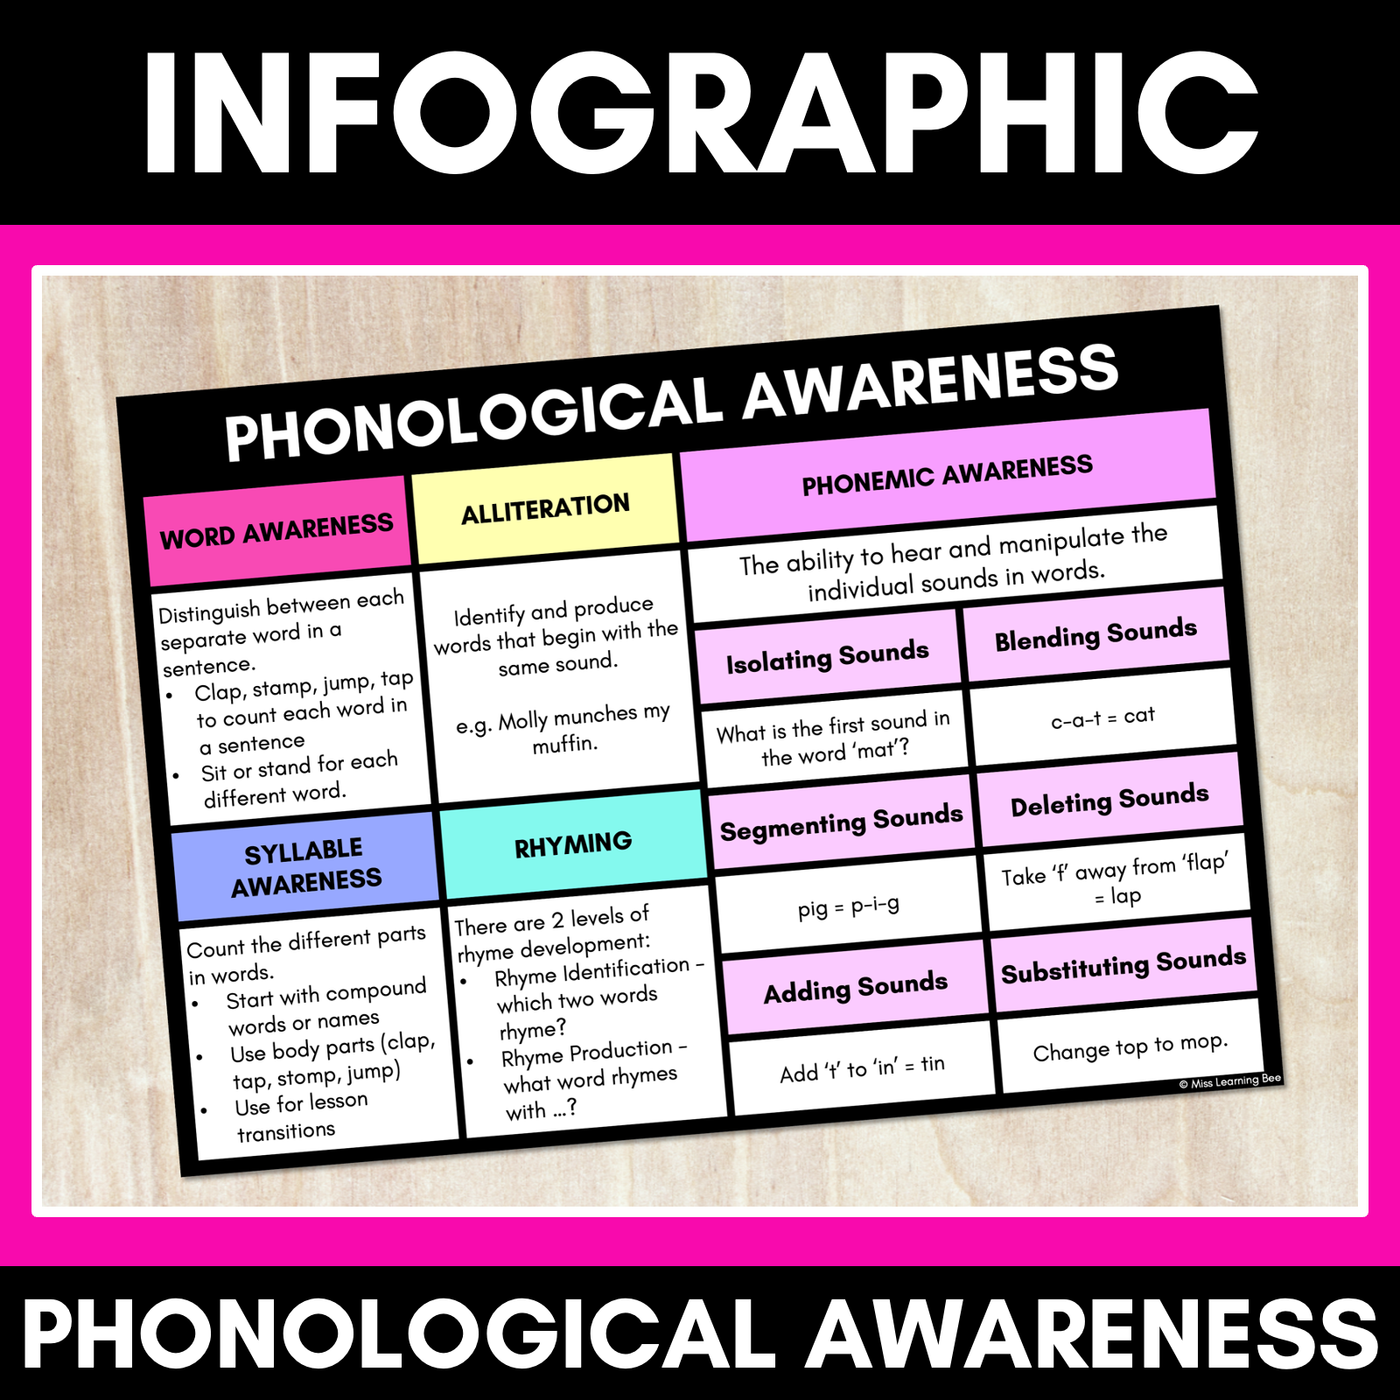 Phonological Awareness Infographic